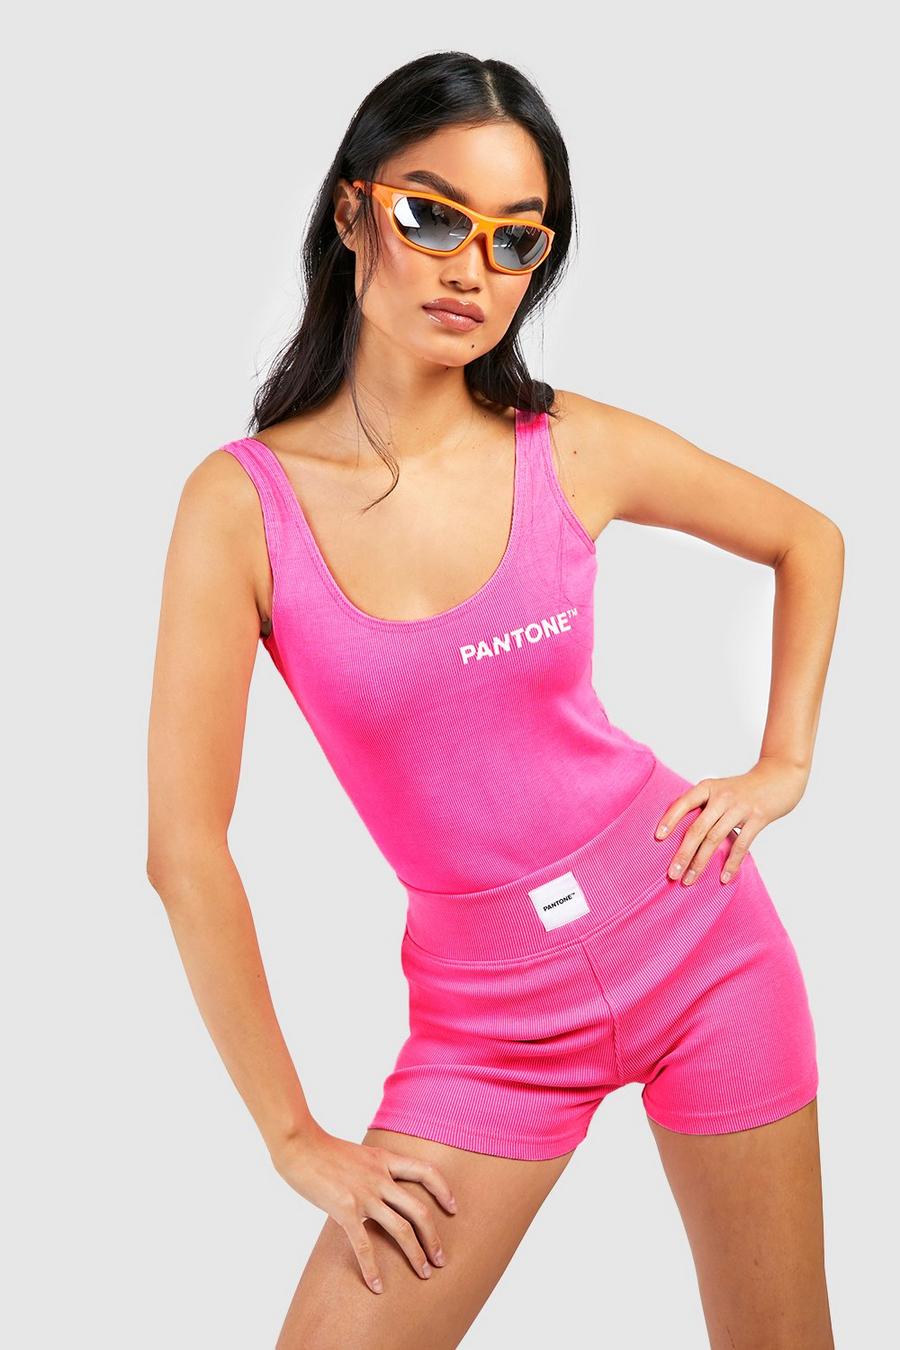 Pantaloncini Booty a coste Pantone, Neon-pink